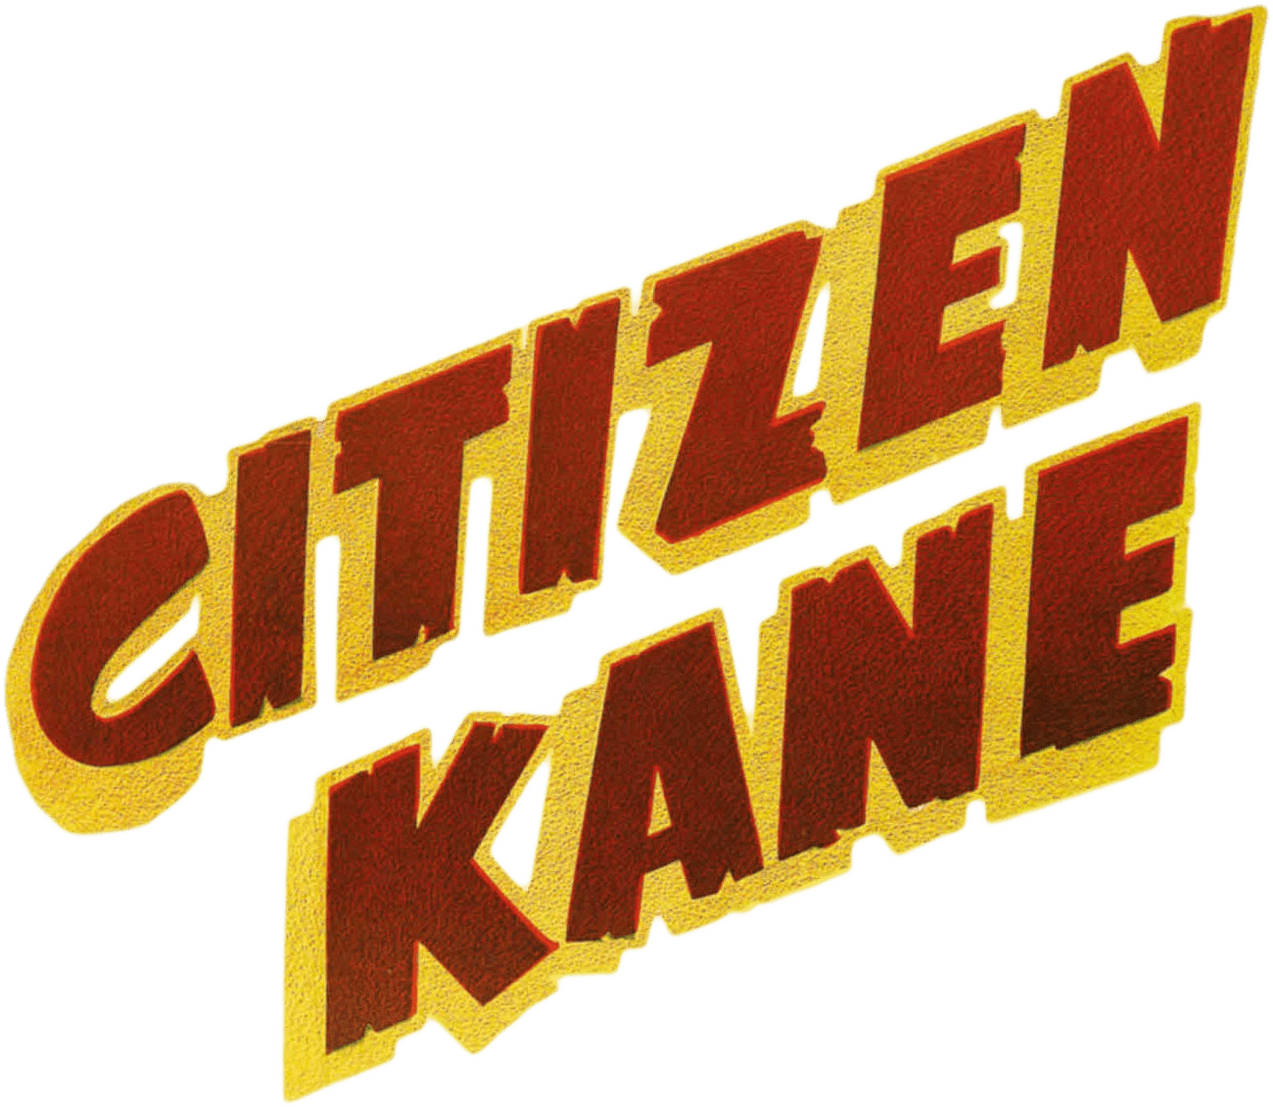 Citizen Kane logo